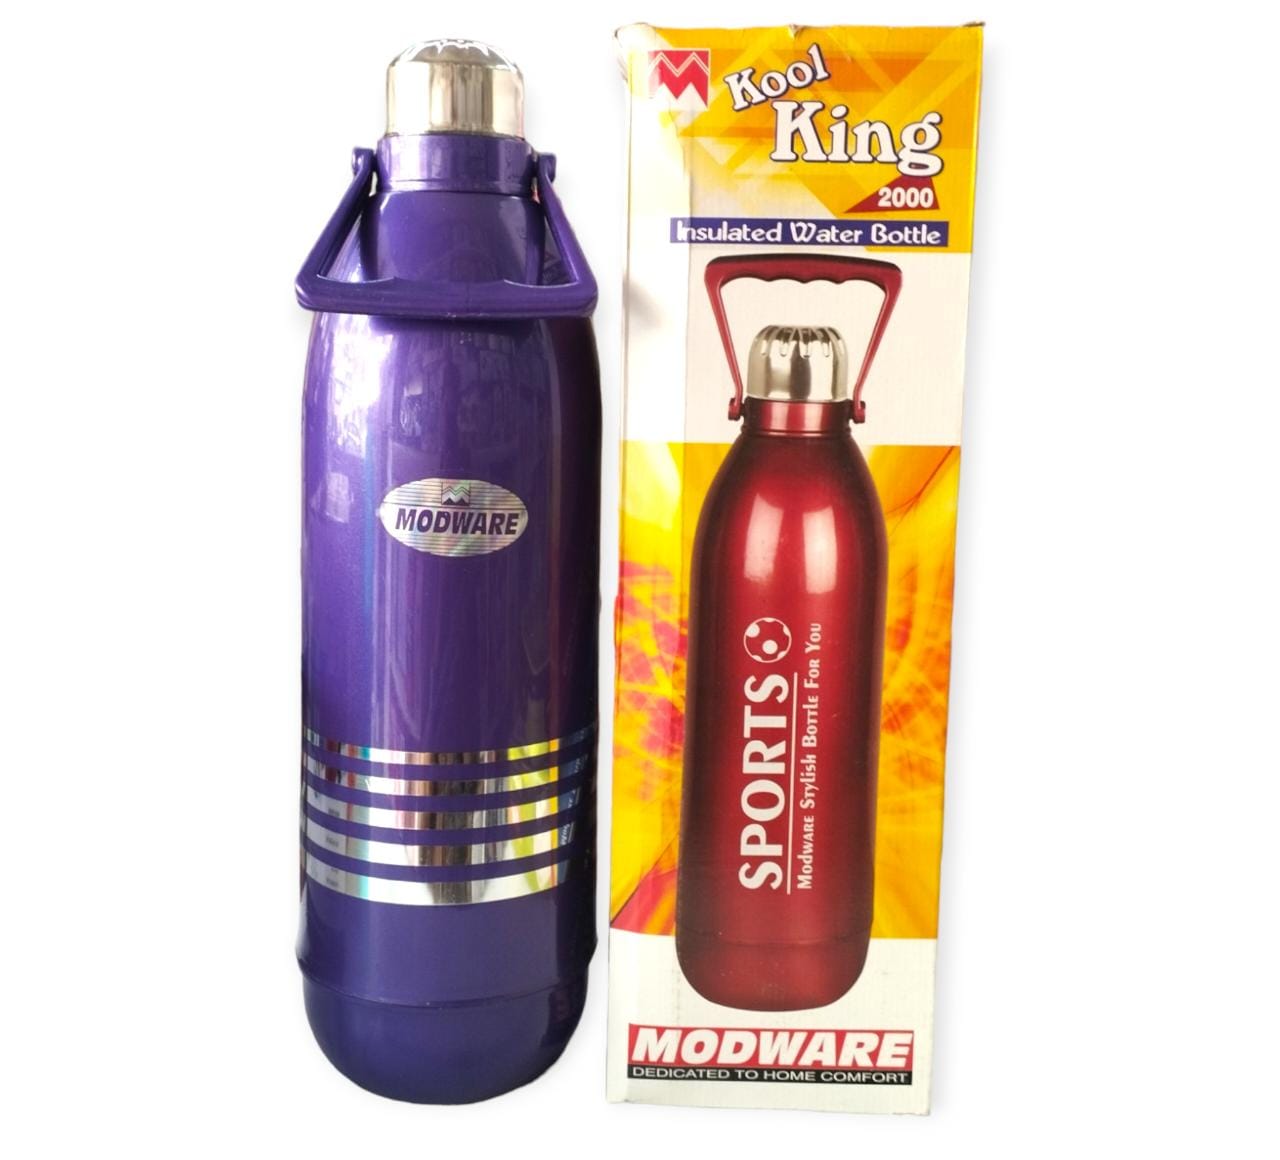 Kool King insulated water bottle 